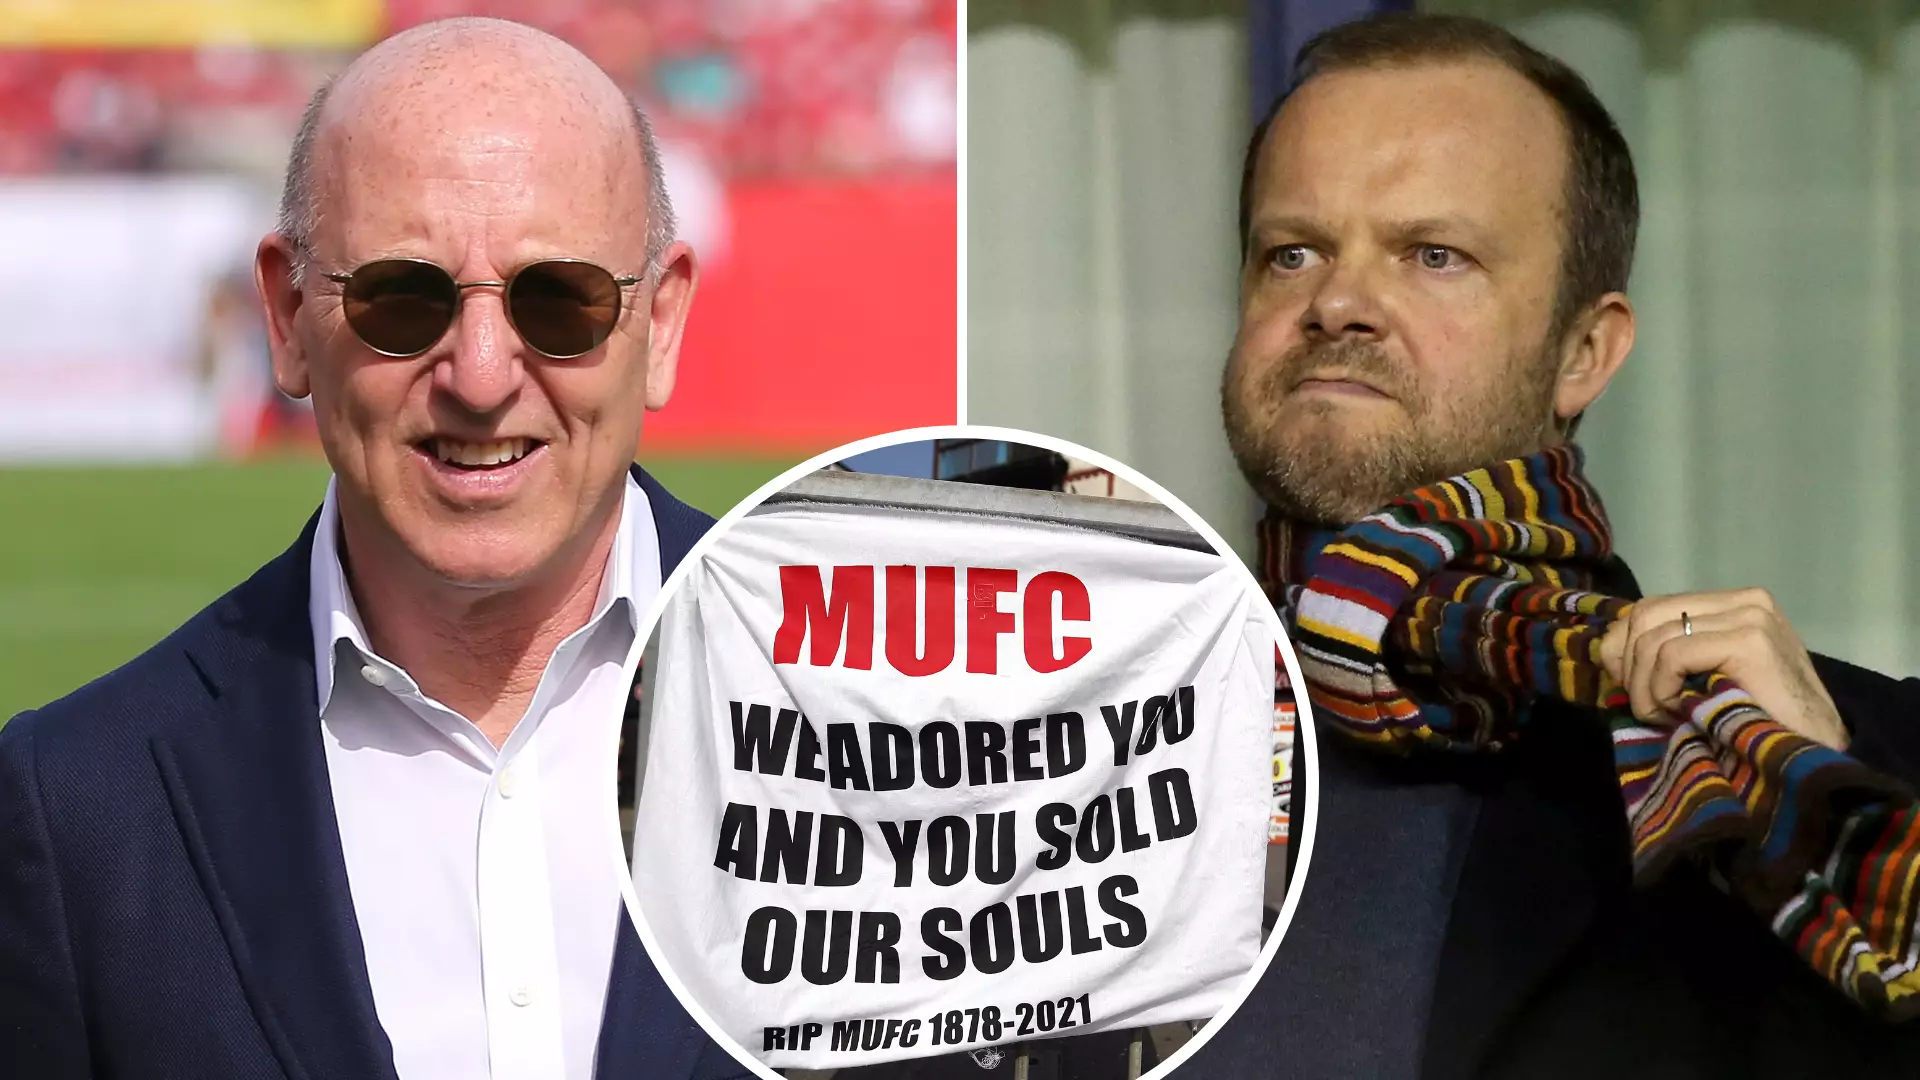 Joel Glazer Sends Open Letter To Manchester United Fans After European Super League Backlash